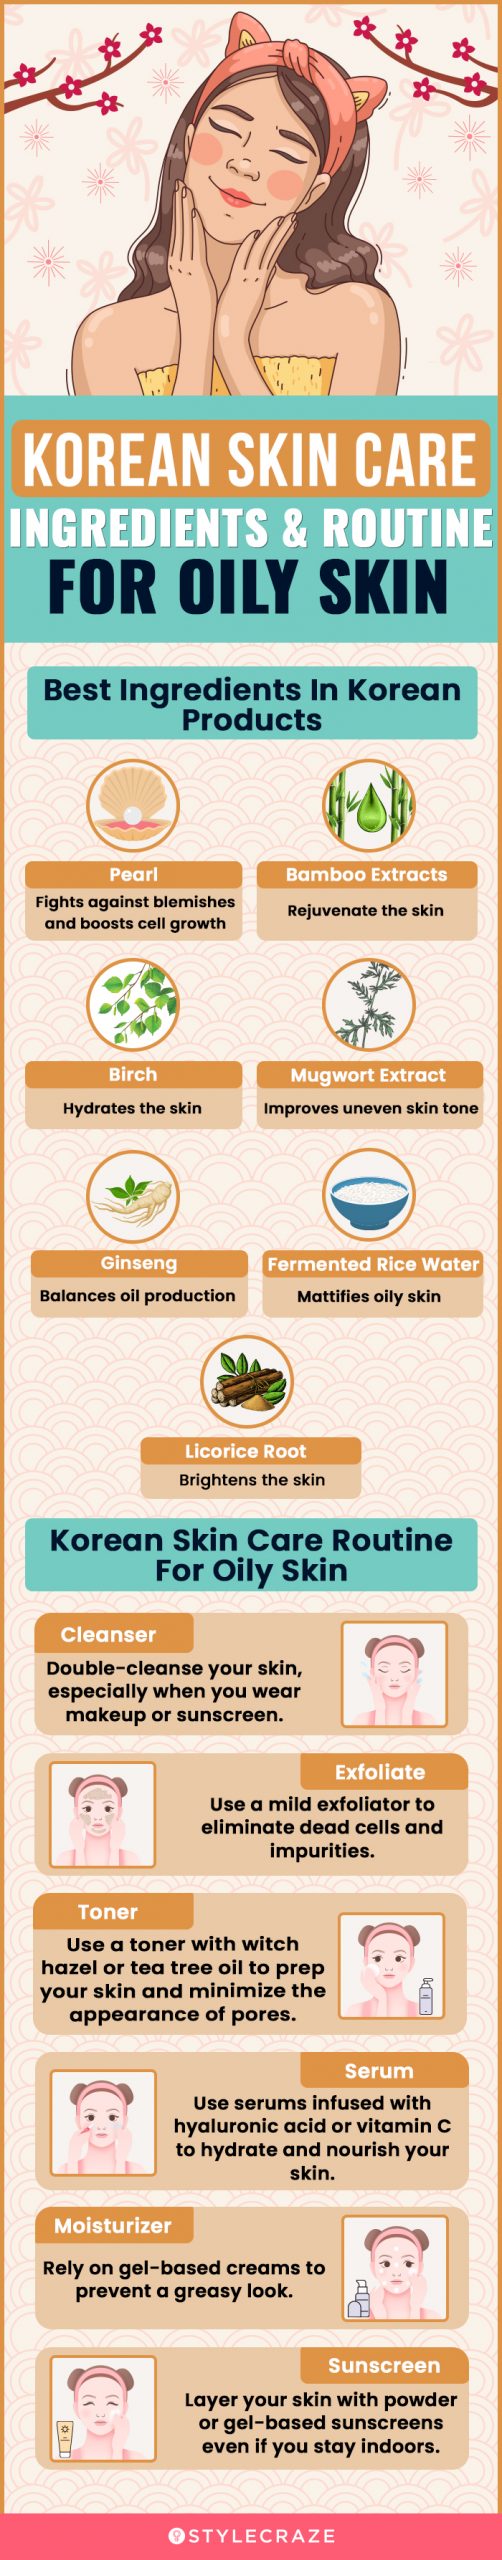 Korean Skin Care Ingredients & Routine For Oily Skin [infographic]